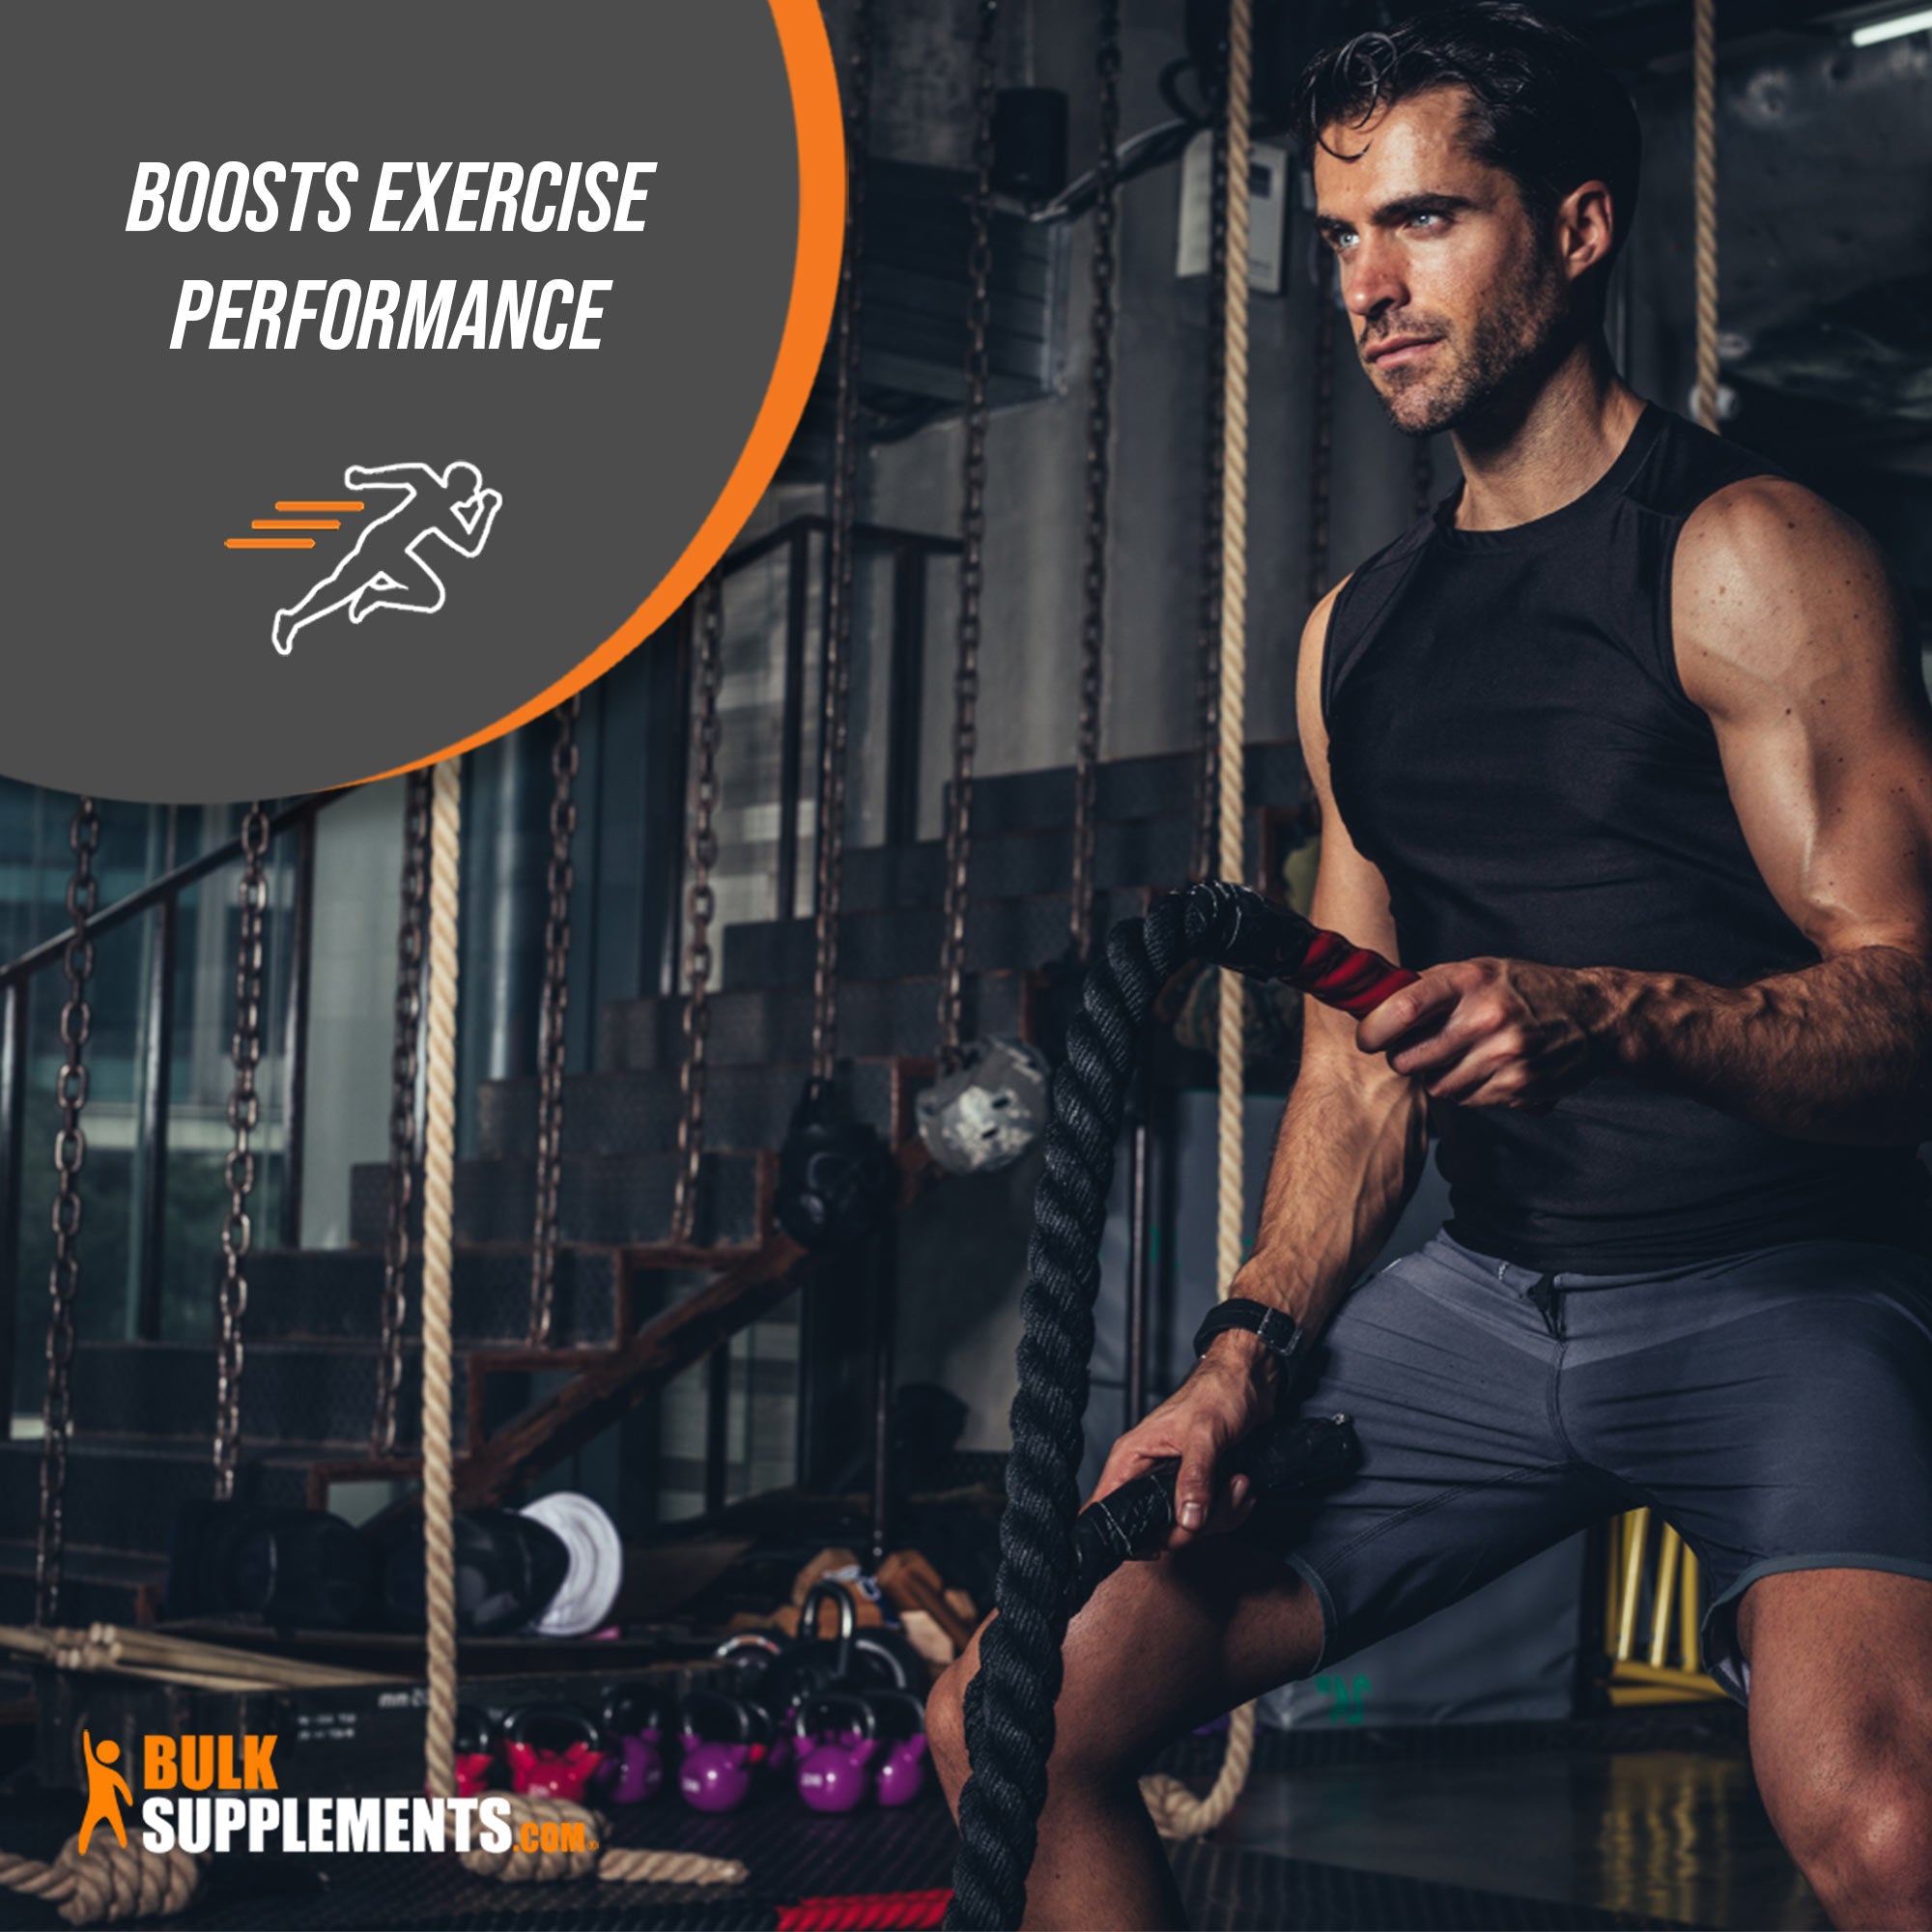 D-Aspartic Acid exercise performance booster workout supplements